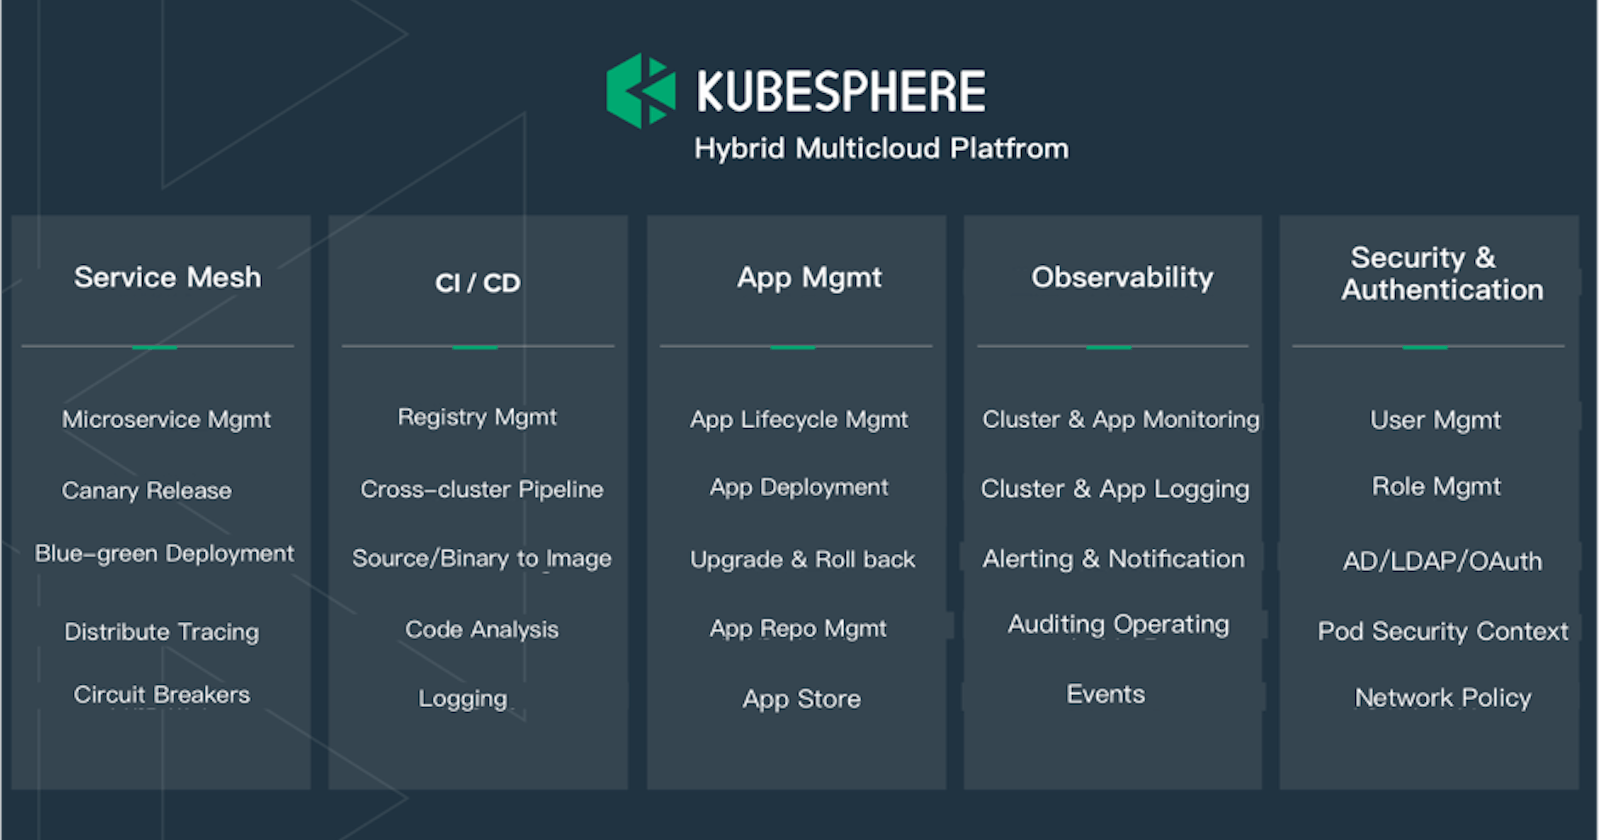 KubeSphere at a glance